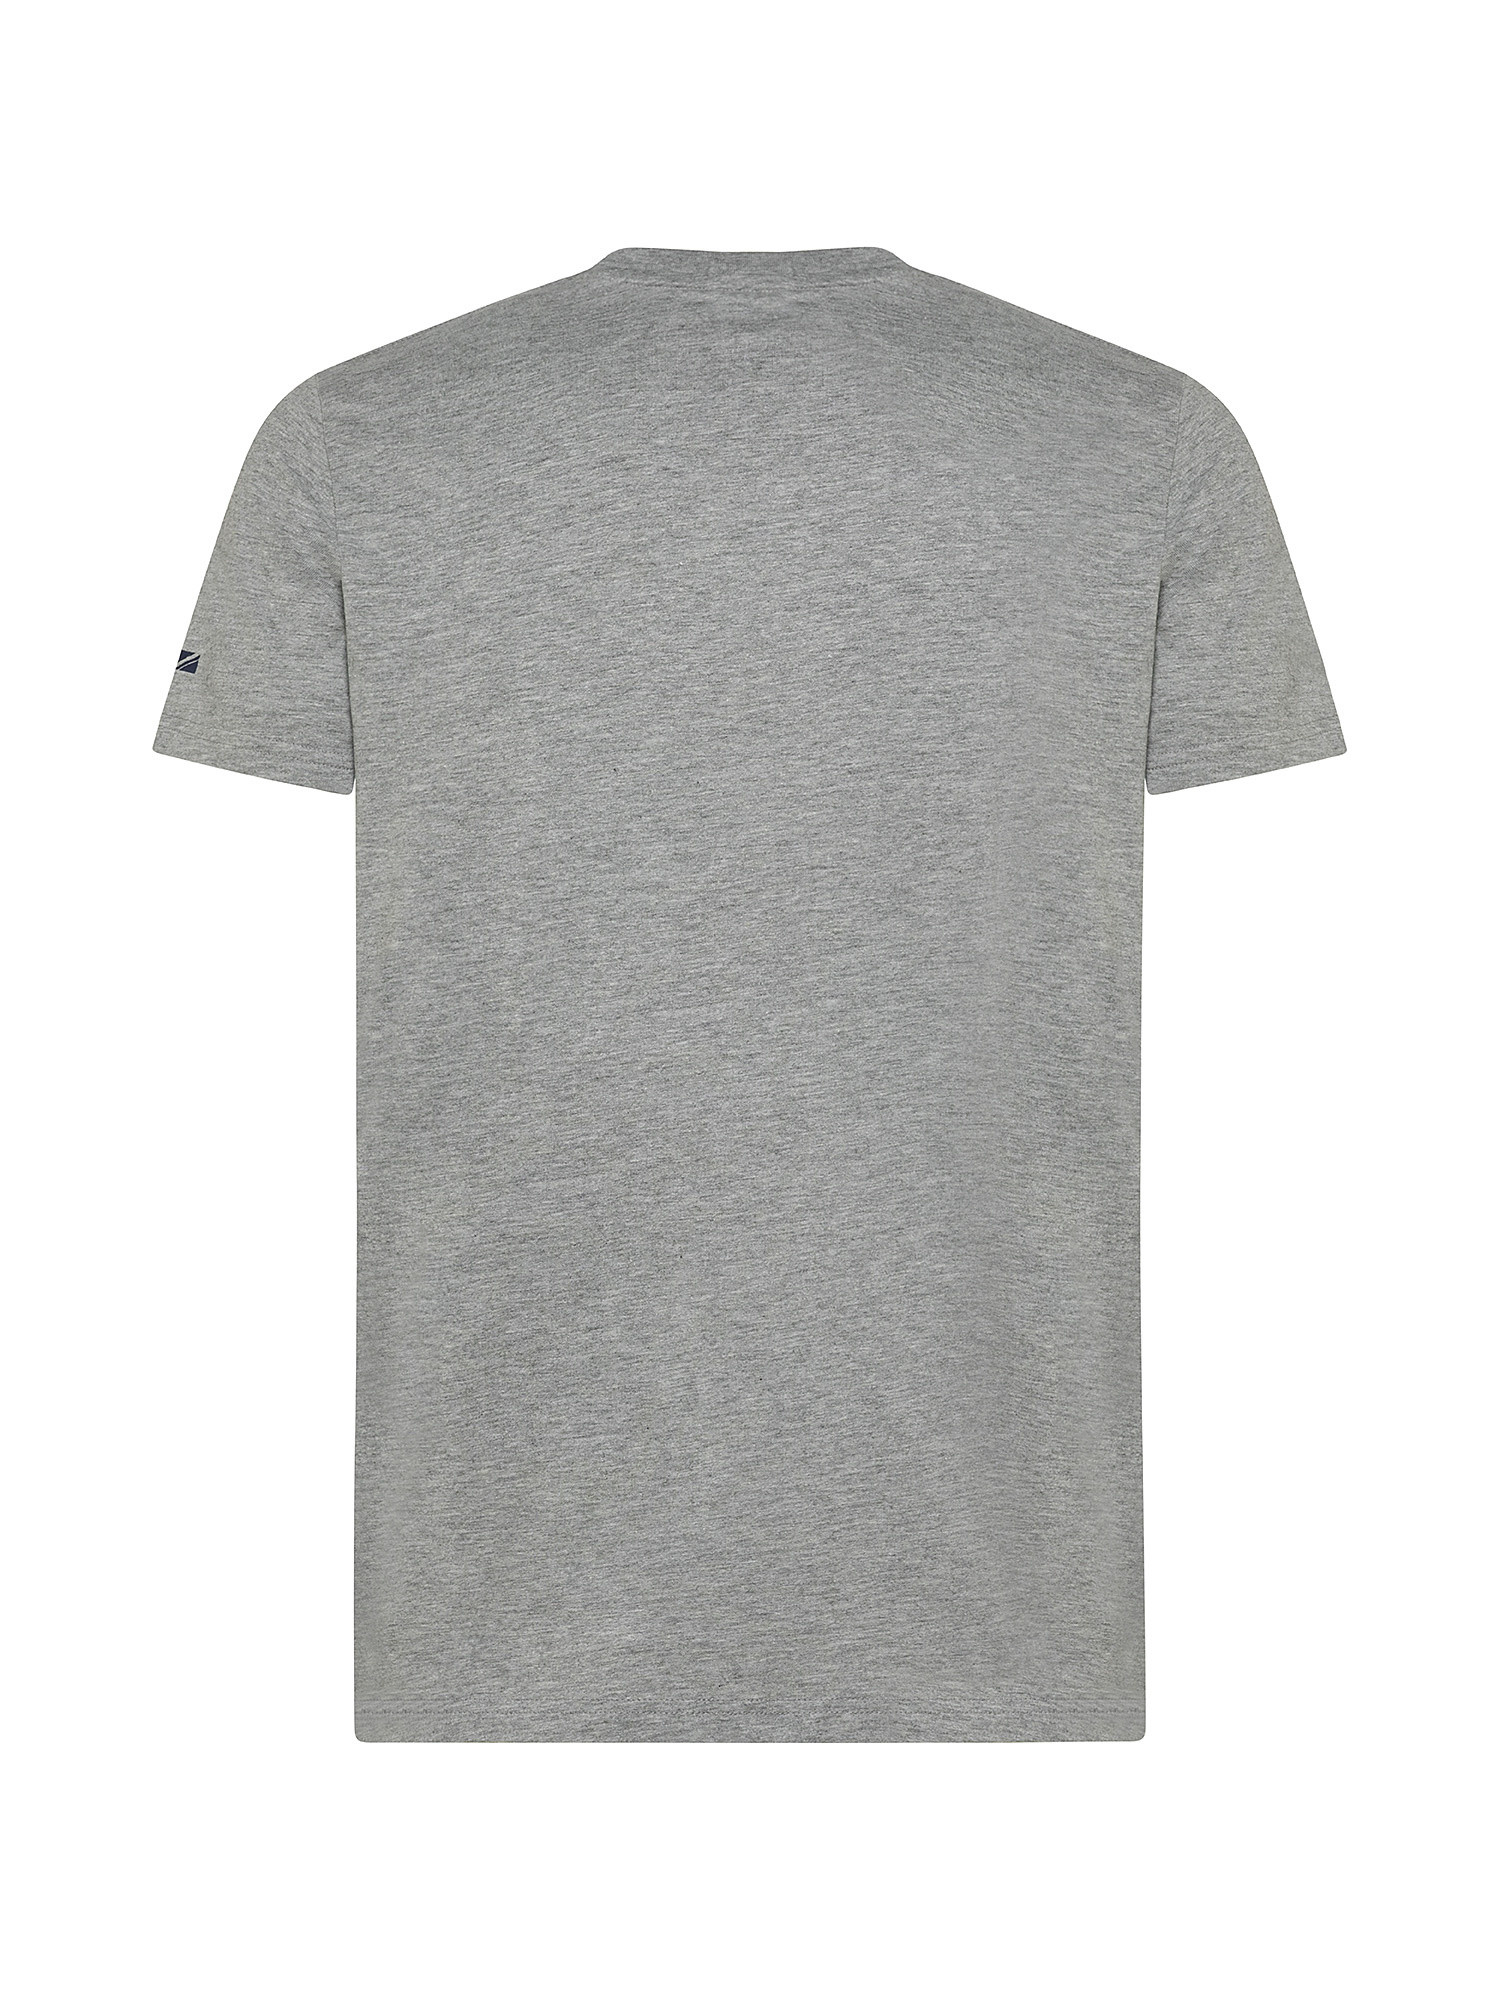 Santino cotton t-shirt, Light Grey, large image number 1